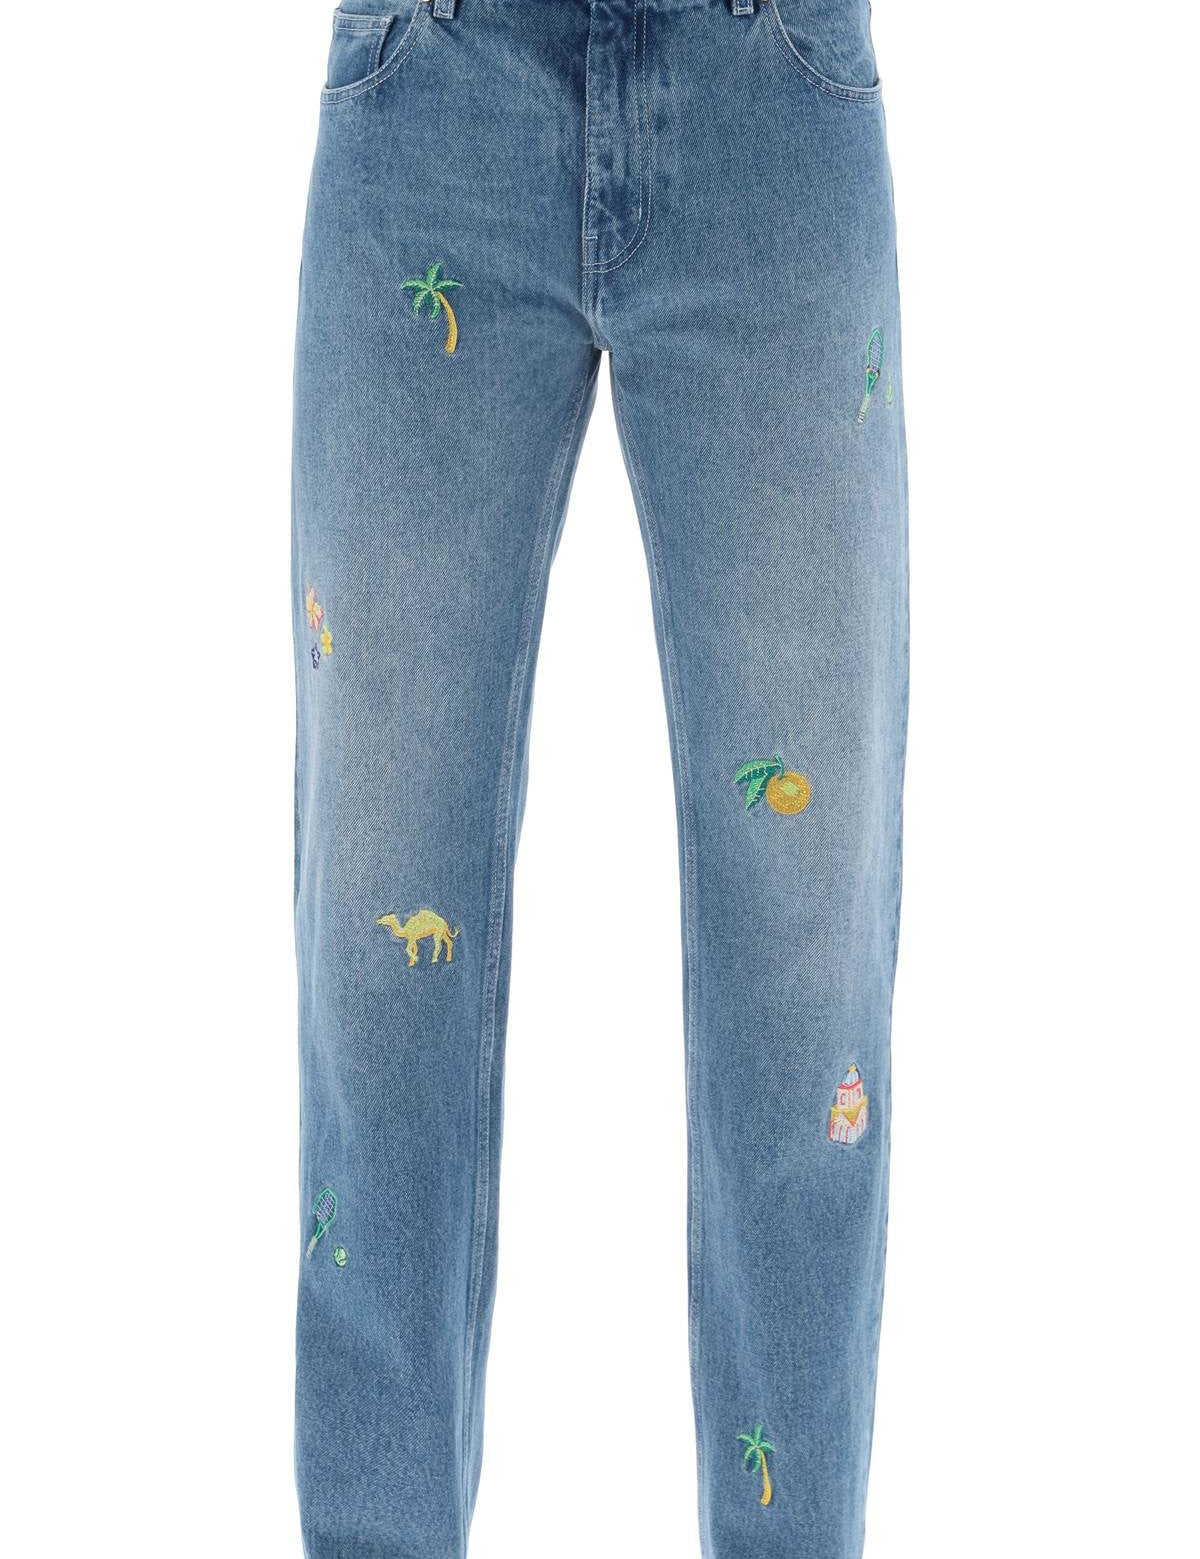 casablanca-embroidered-straight-jeans.jpg